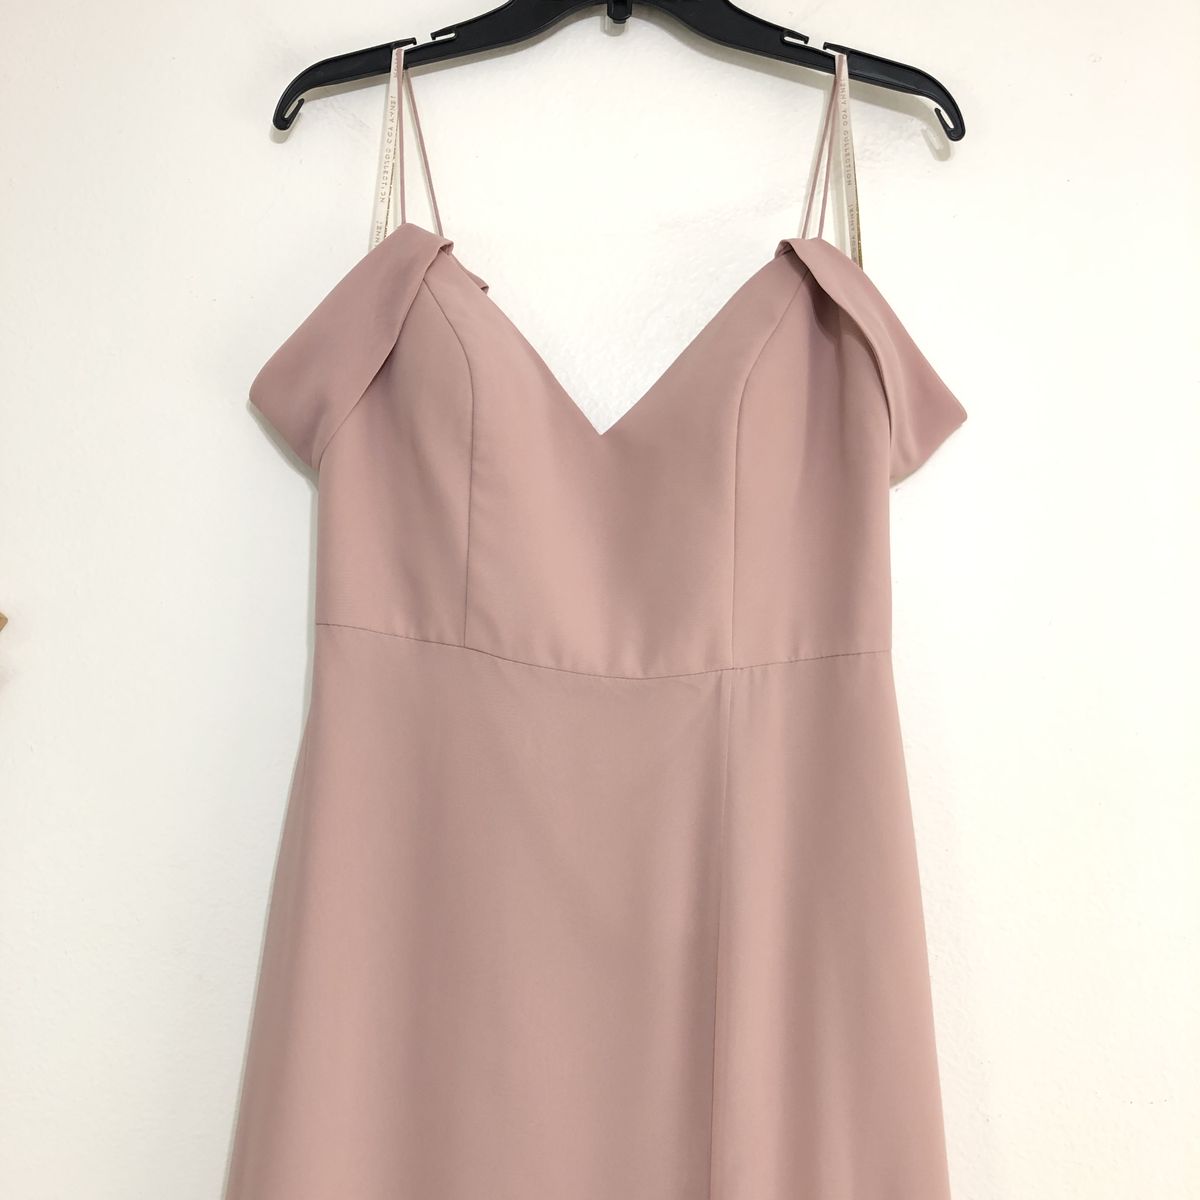 Style Priya Jenny Yoo Size 4 Off The Shoulder Pink Side Slit Dress on Queenly